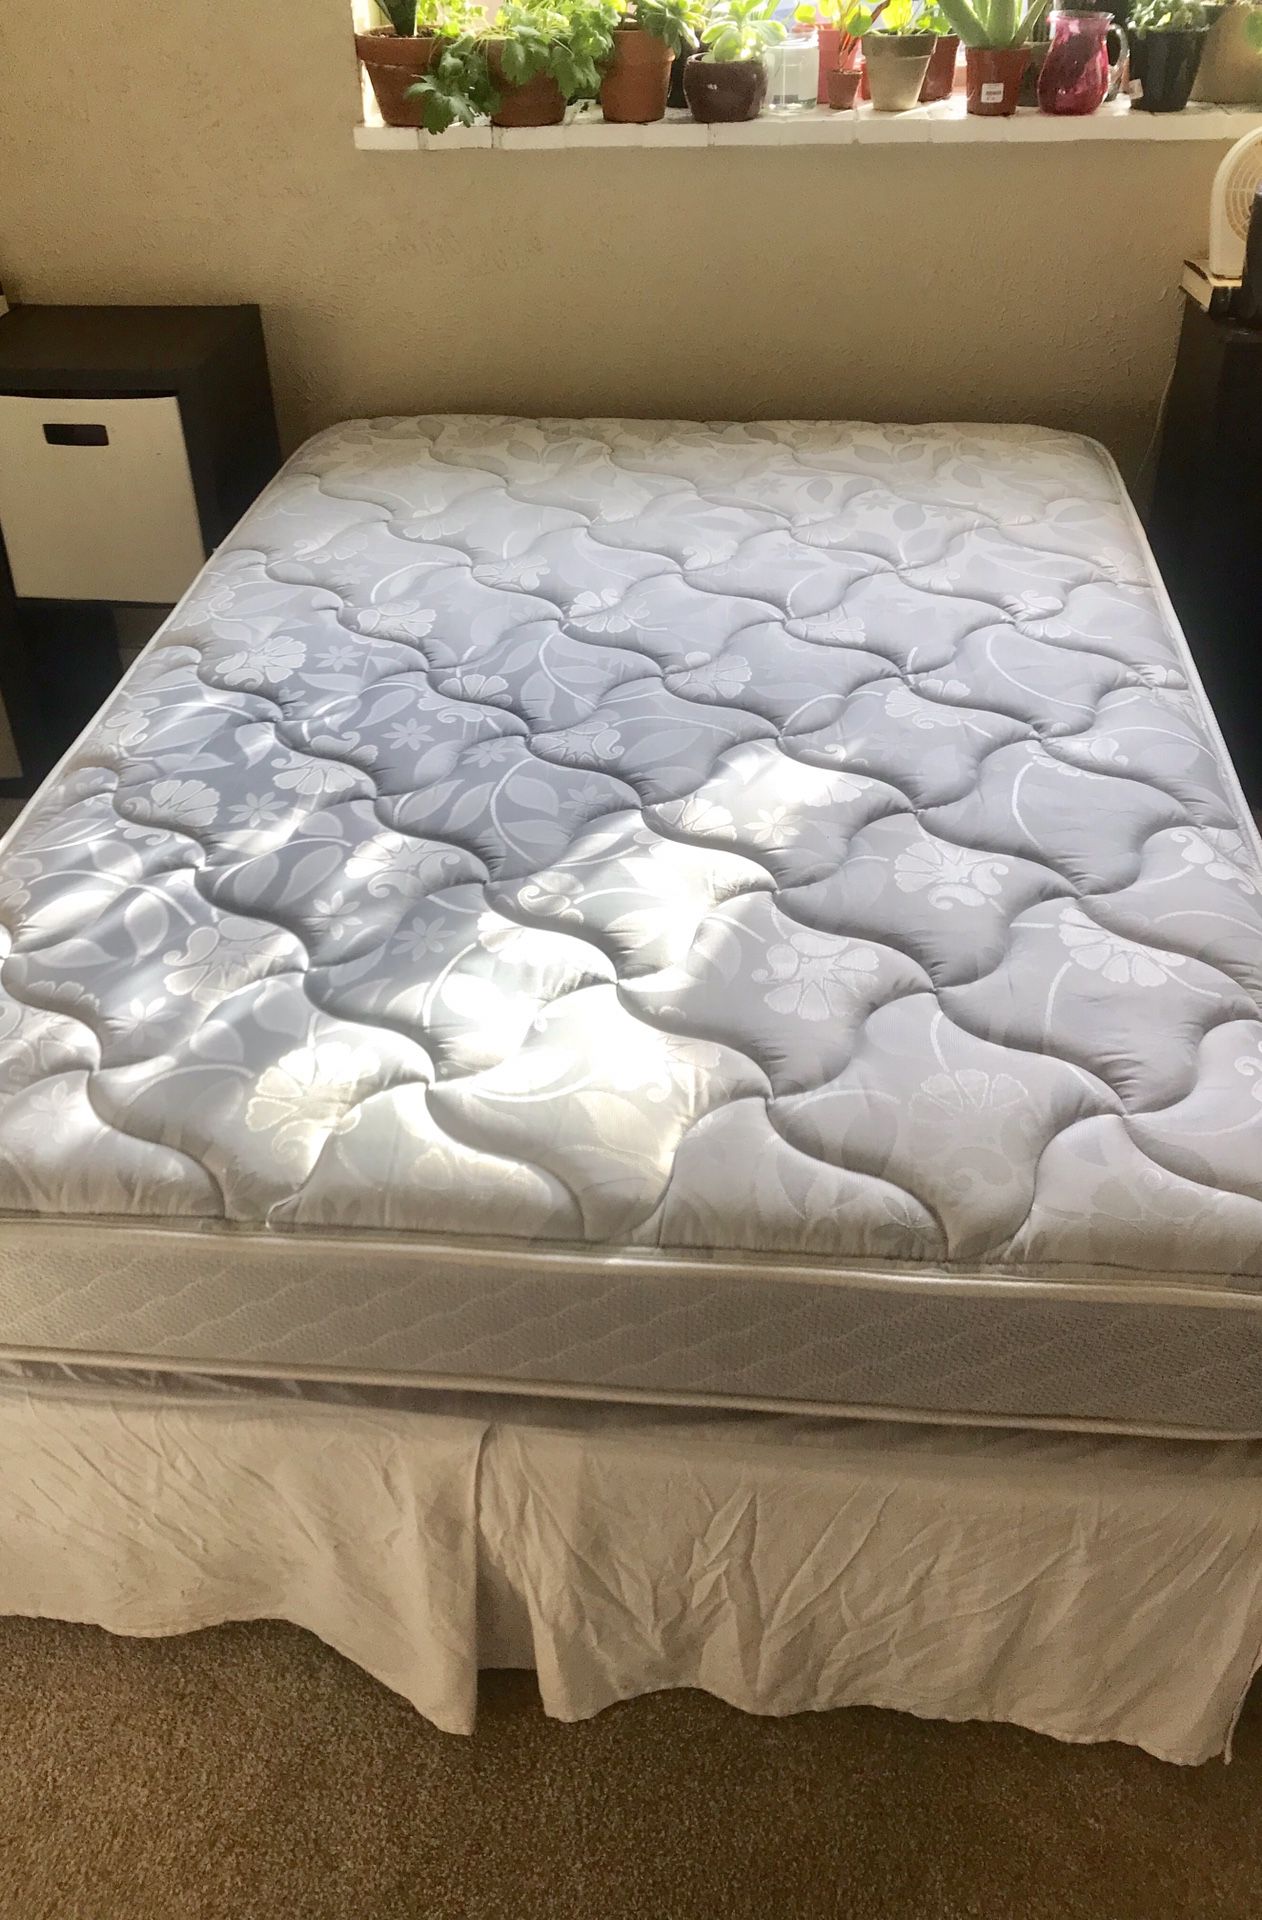 Brand new full mattress and boxsprings